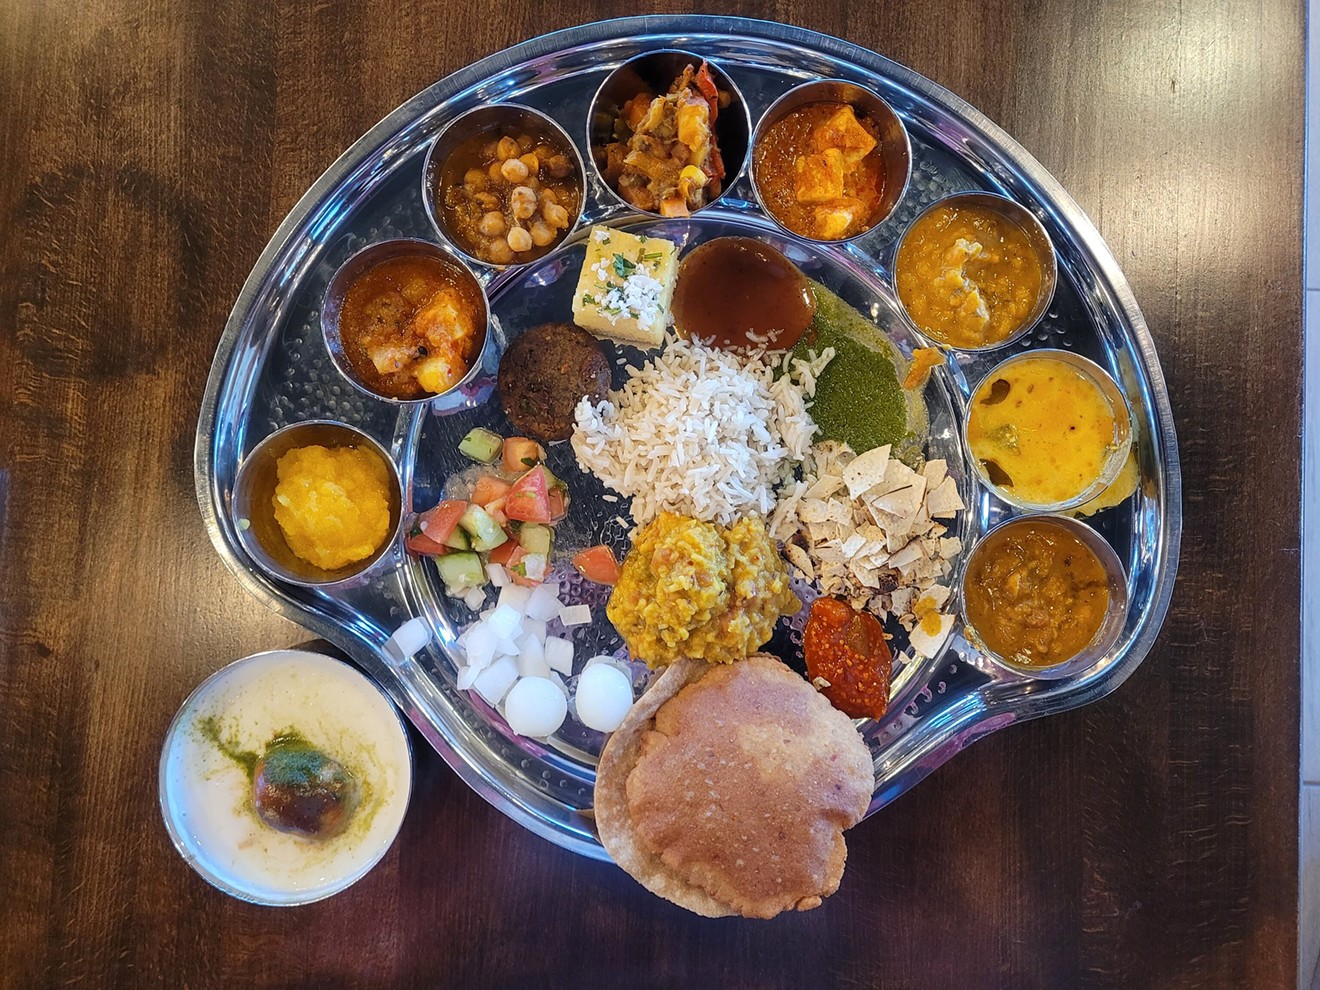 Brijwasi thali is served on Wednesdays and Saturdays.